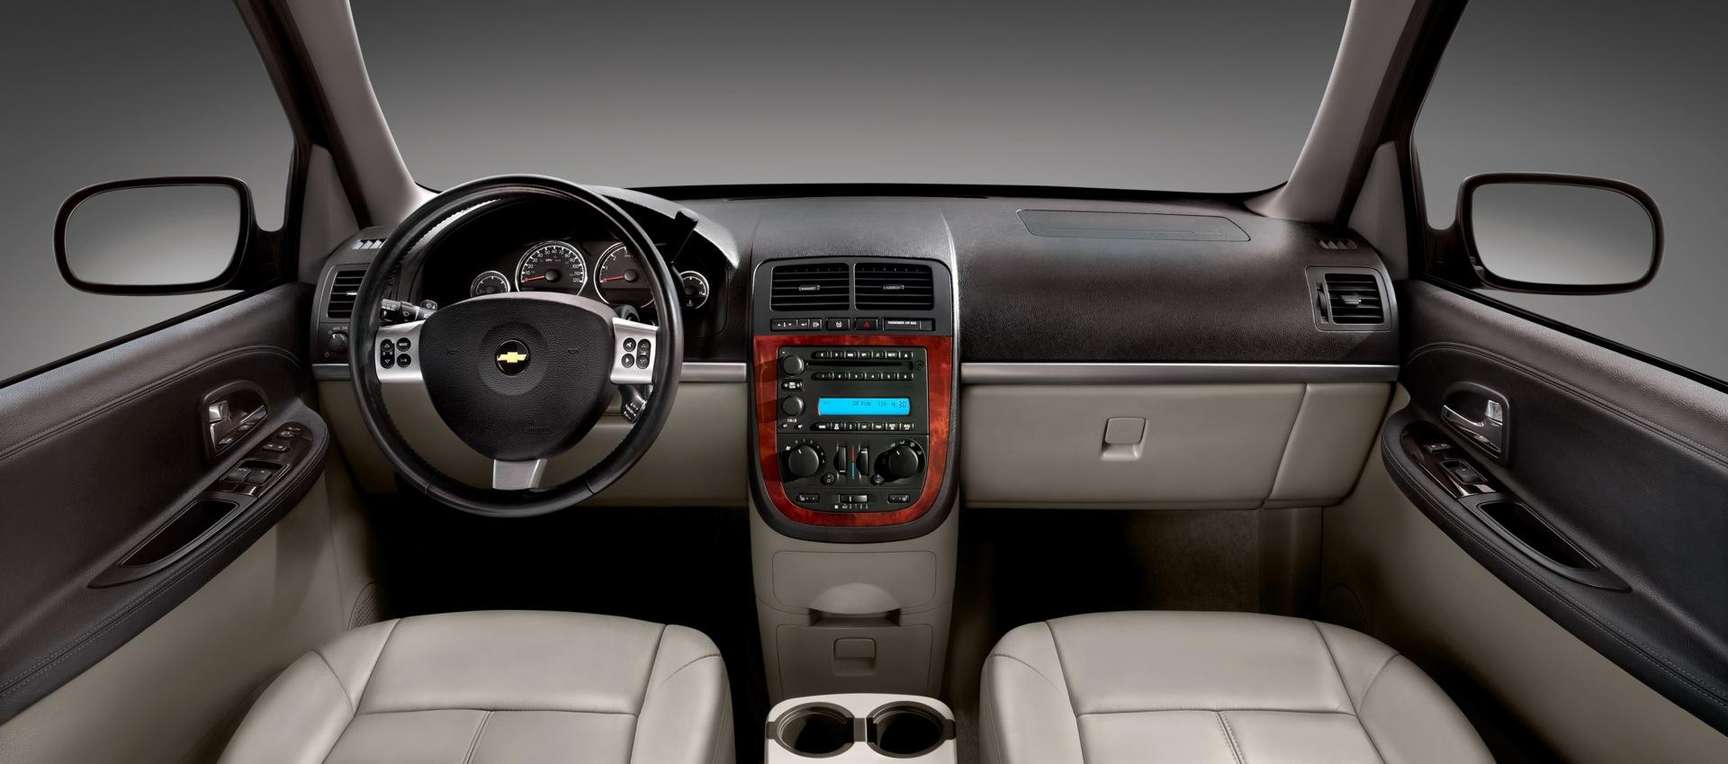 Chevrolet Uplander #7348346